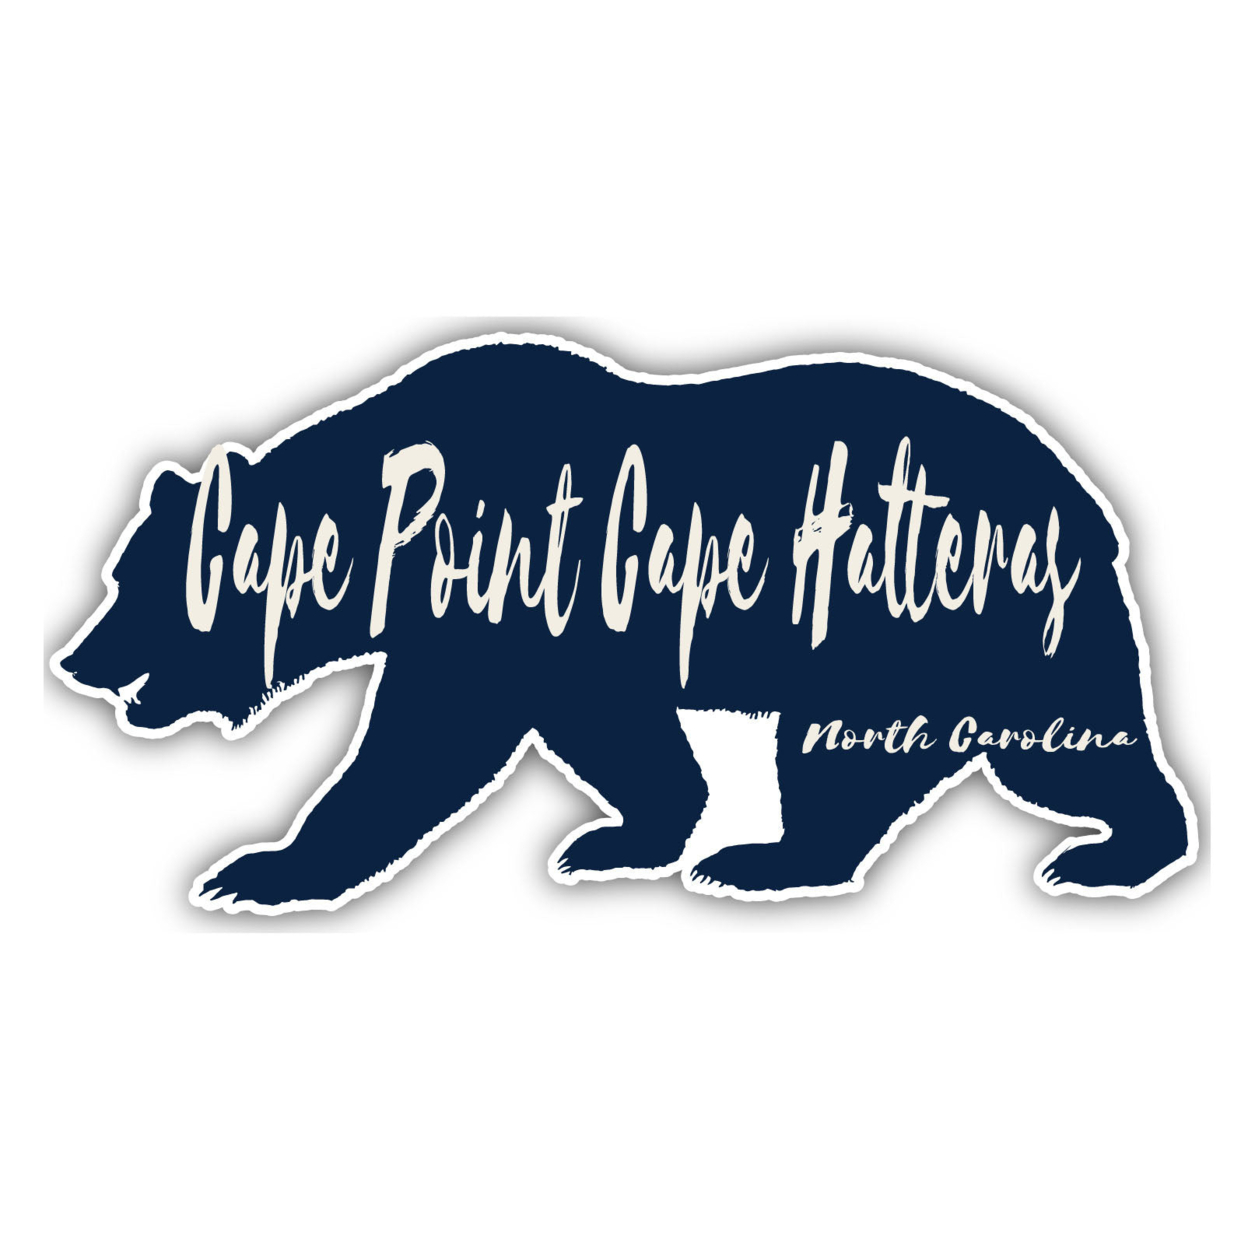 Cape Point Cape Hatteras North Carolina Souvenir Decorative Stickers (Choose Theme And Size) - Single Unit, 2-Inch, Bear